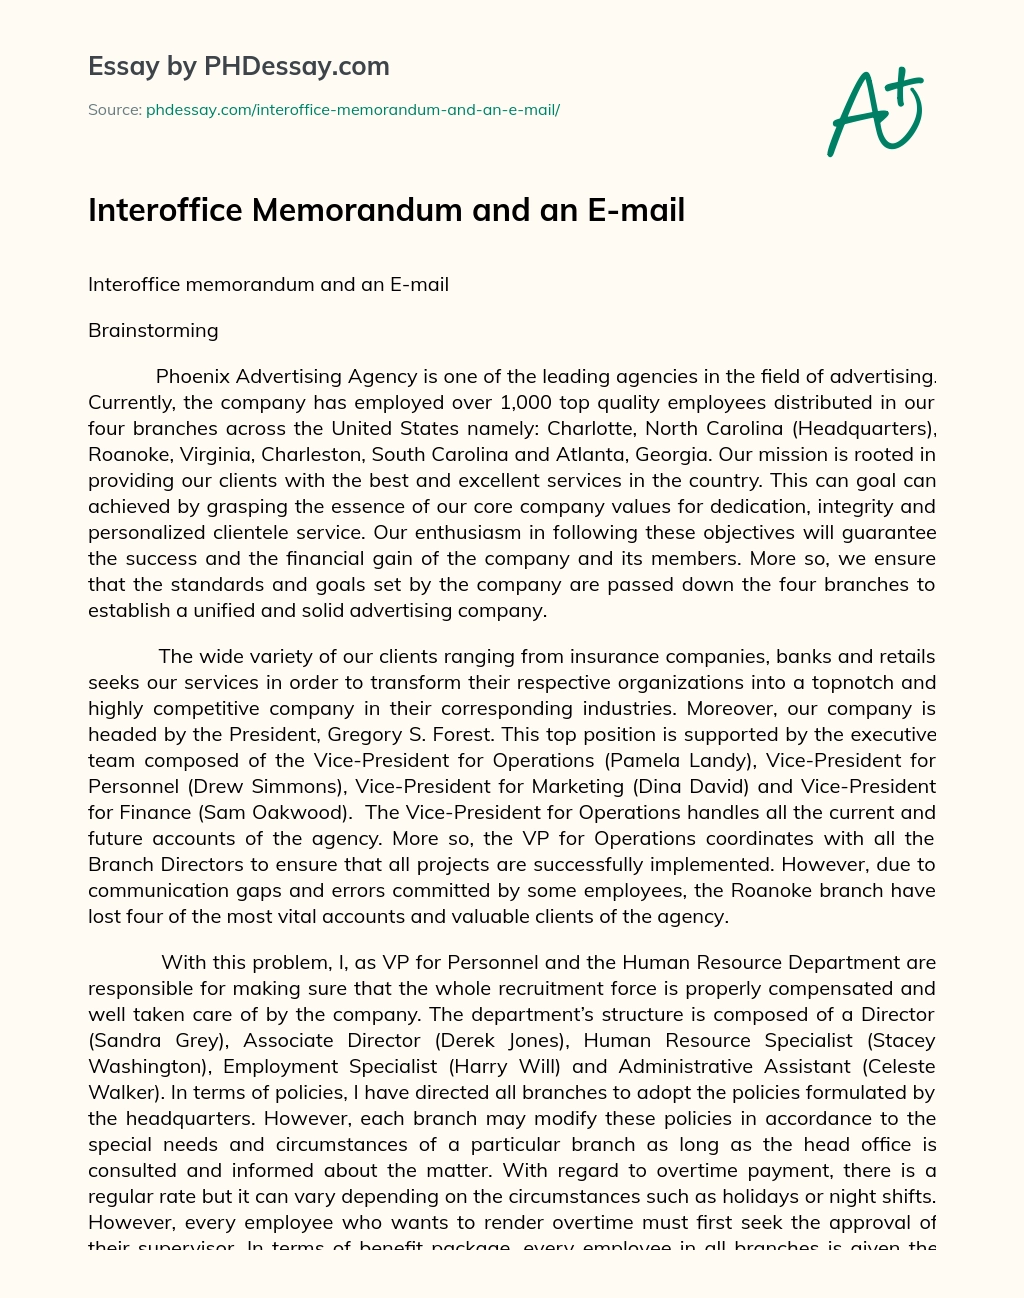 Interoffice Memorandum and an E-mail essay